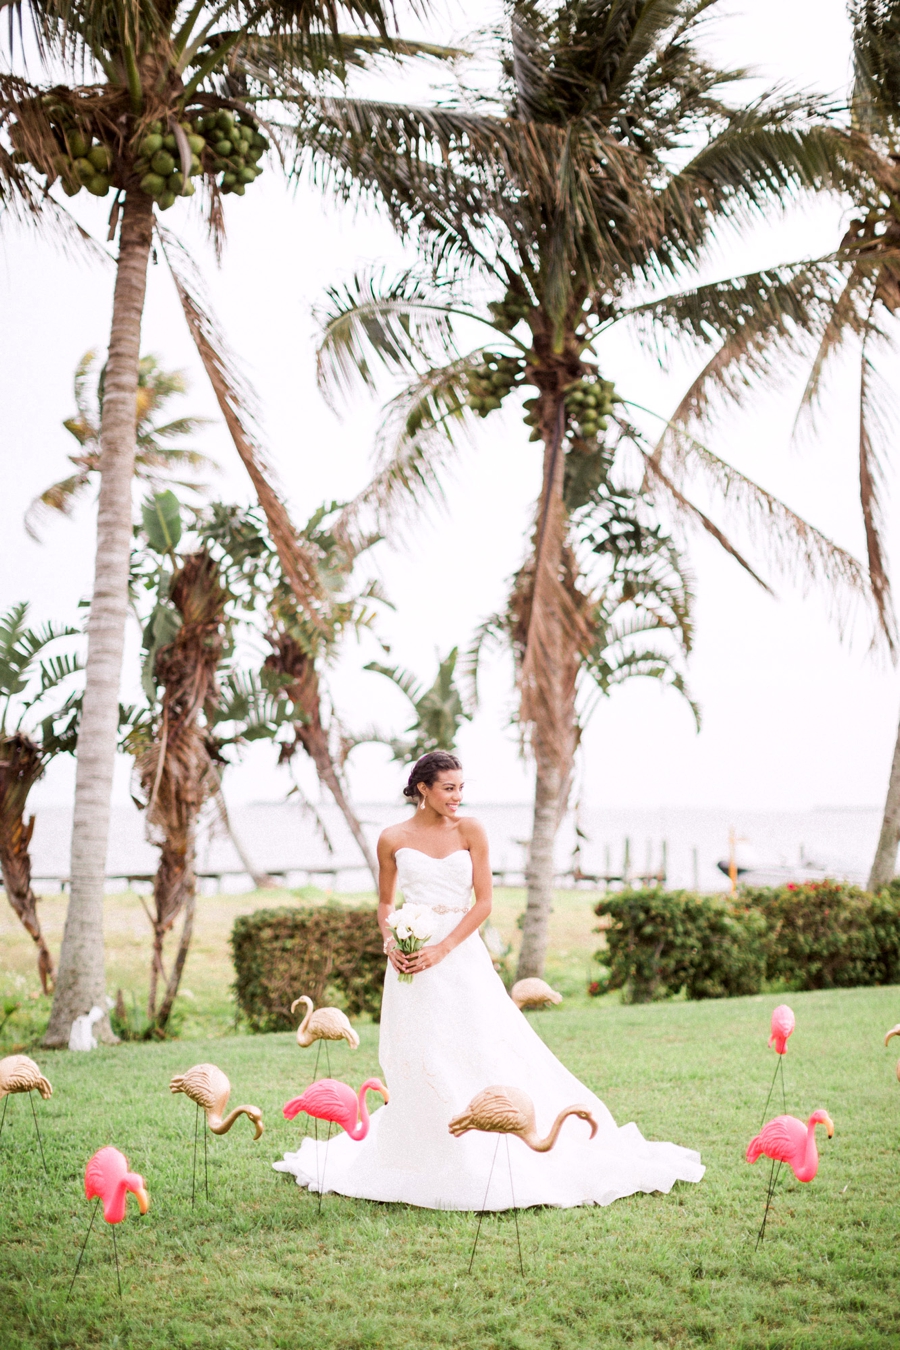 Chic Florida Inspired Pink and Aqua Wedding Ideas via TheELD.com